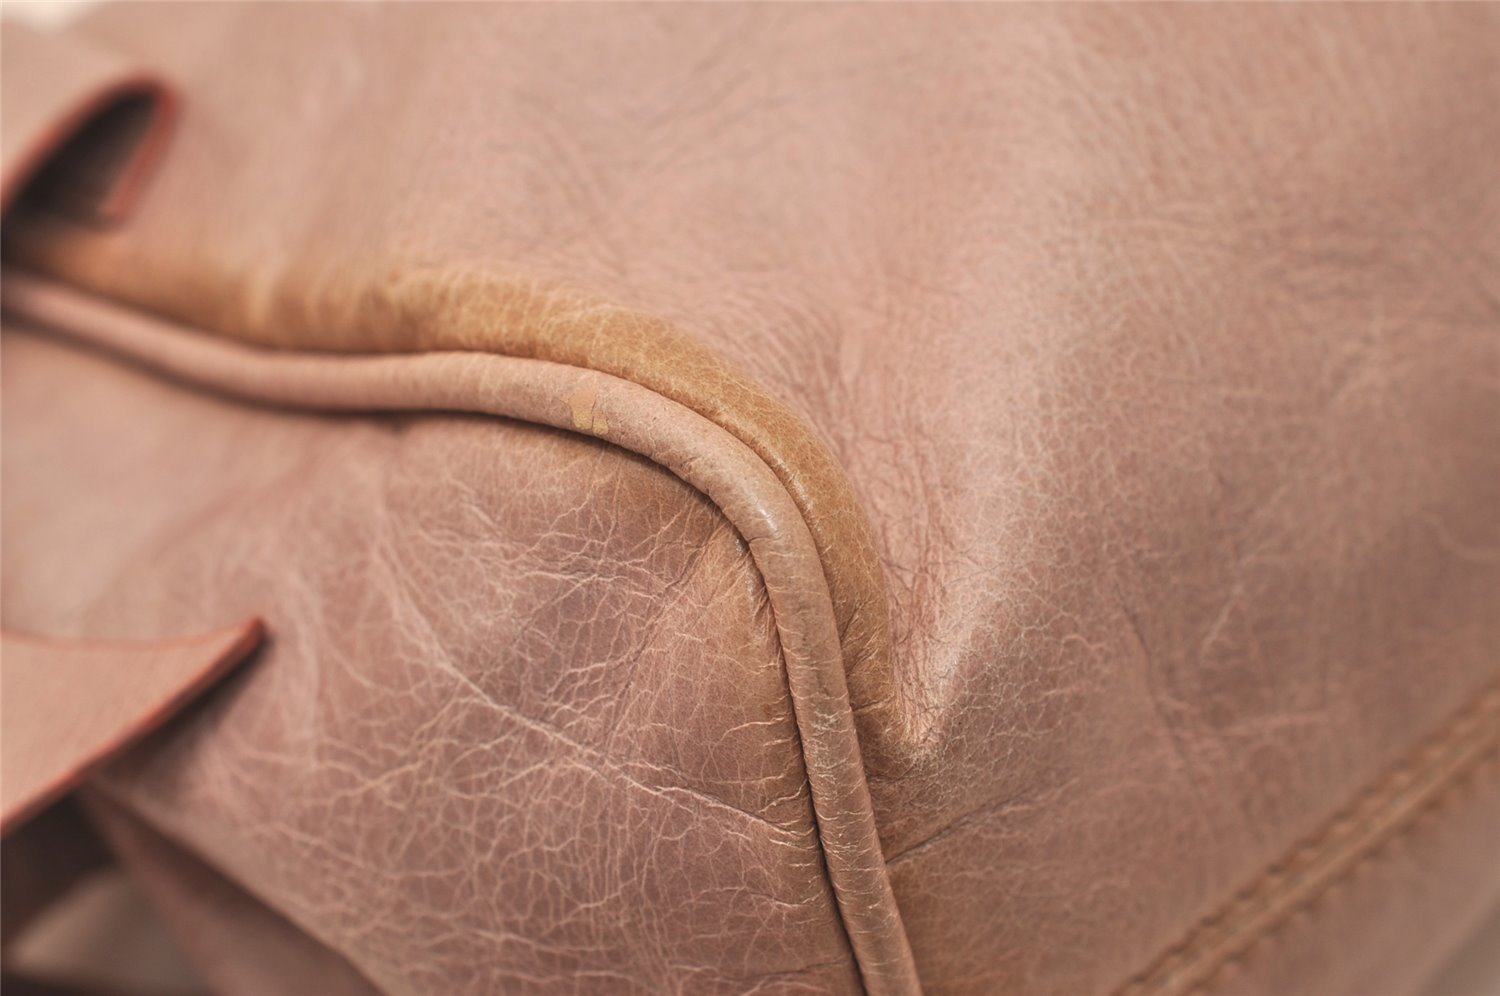 Authentic MIU MIU Vintage Ribbon Leather Shoulder Hand Bag Purse Pink 8050J